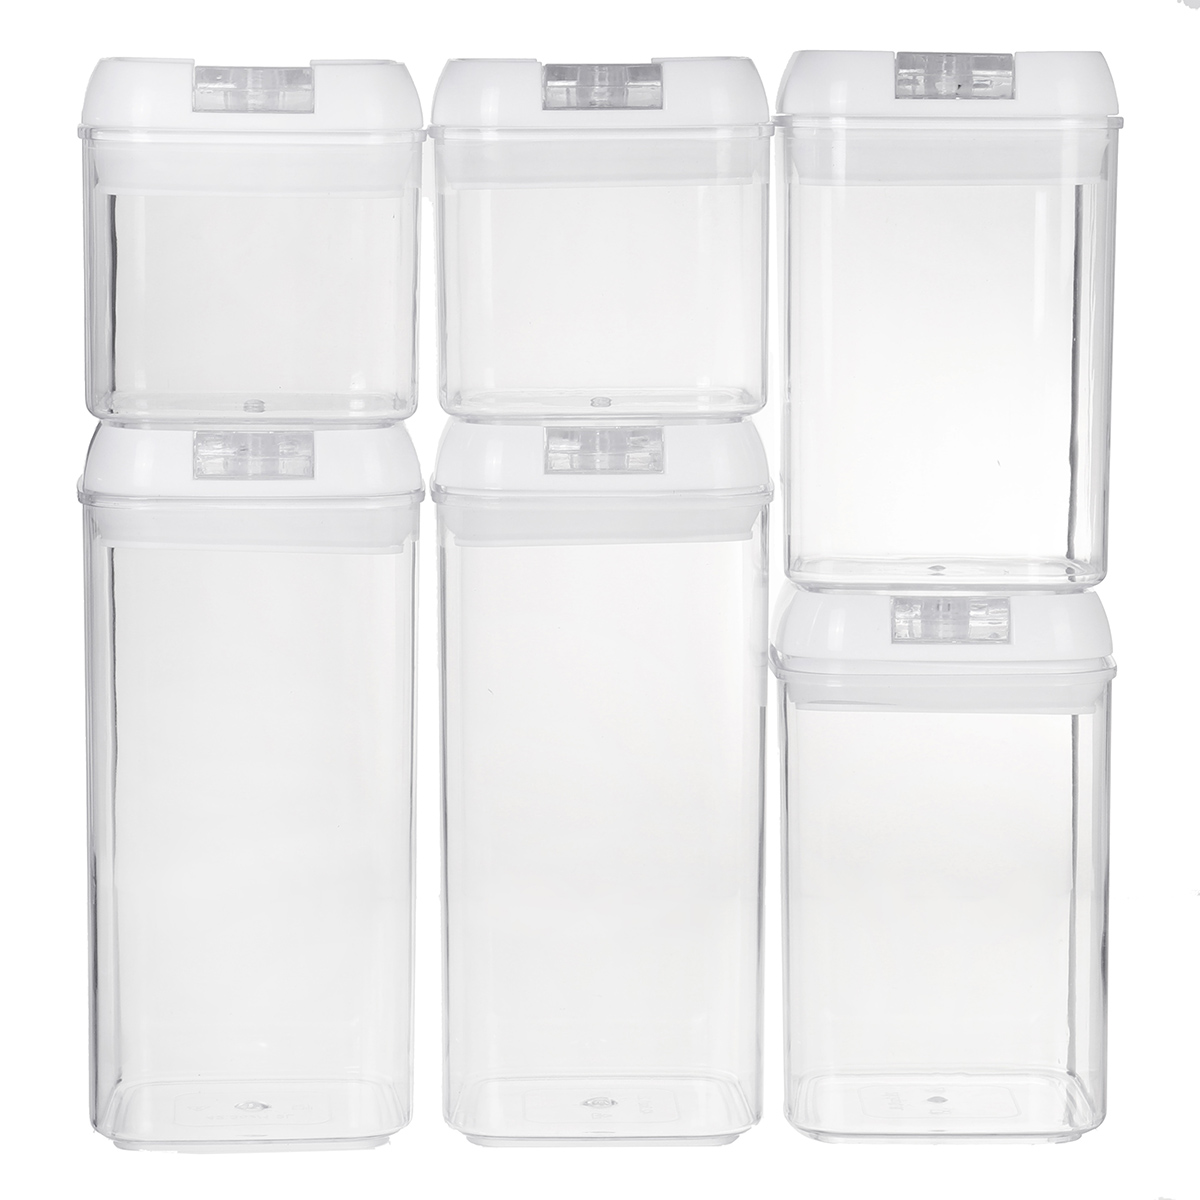 6pcs-Airtight-Refrigerator-Food-Container-Storage-with-Lock-Lids-Plastic-Transparent-Multigrain-Cont-1752734-21